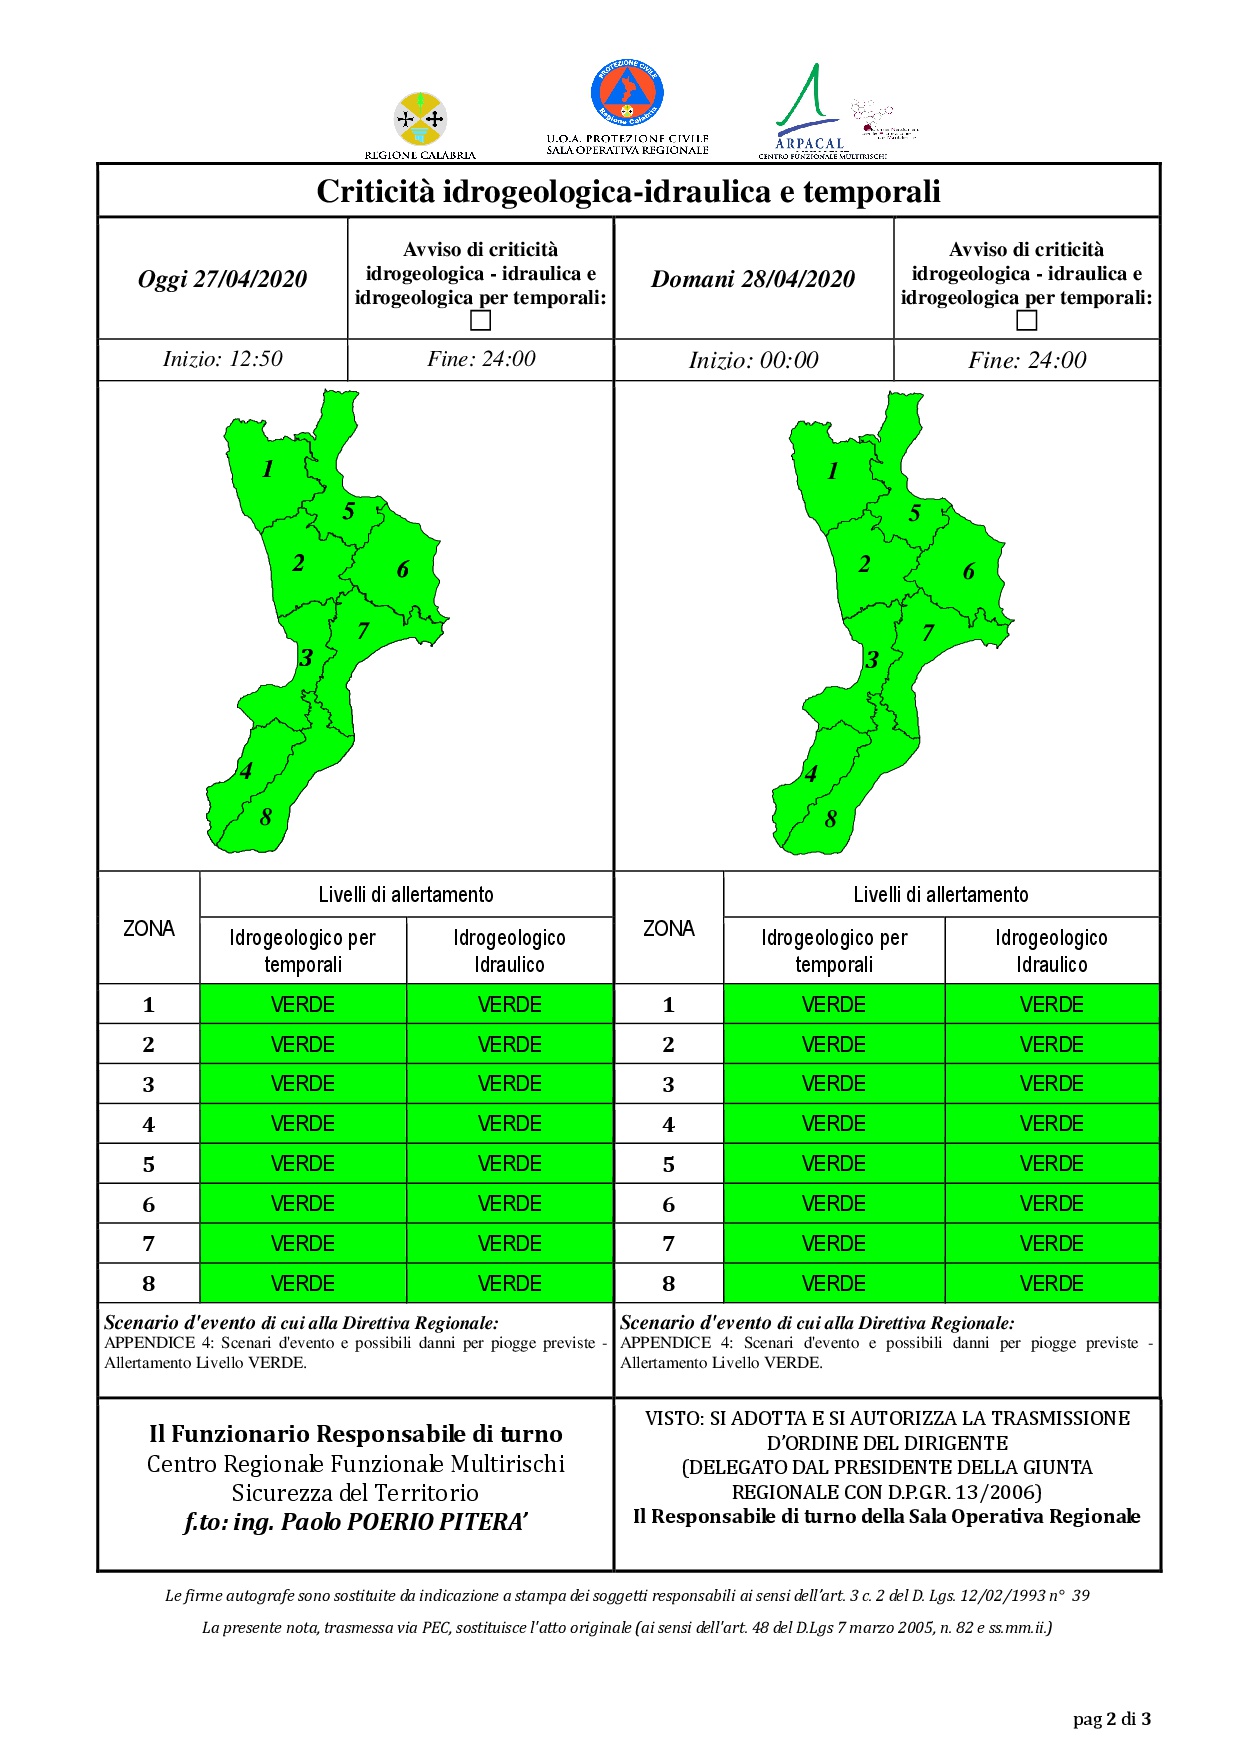 Criticità idrogeologica-idraulica e temporali in Calabria 27-04-2020